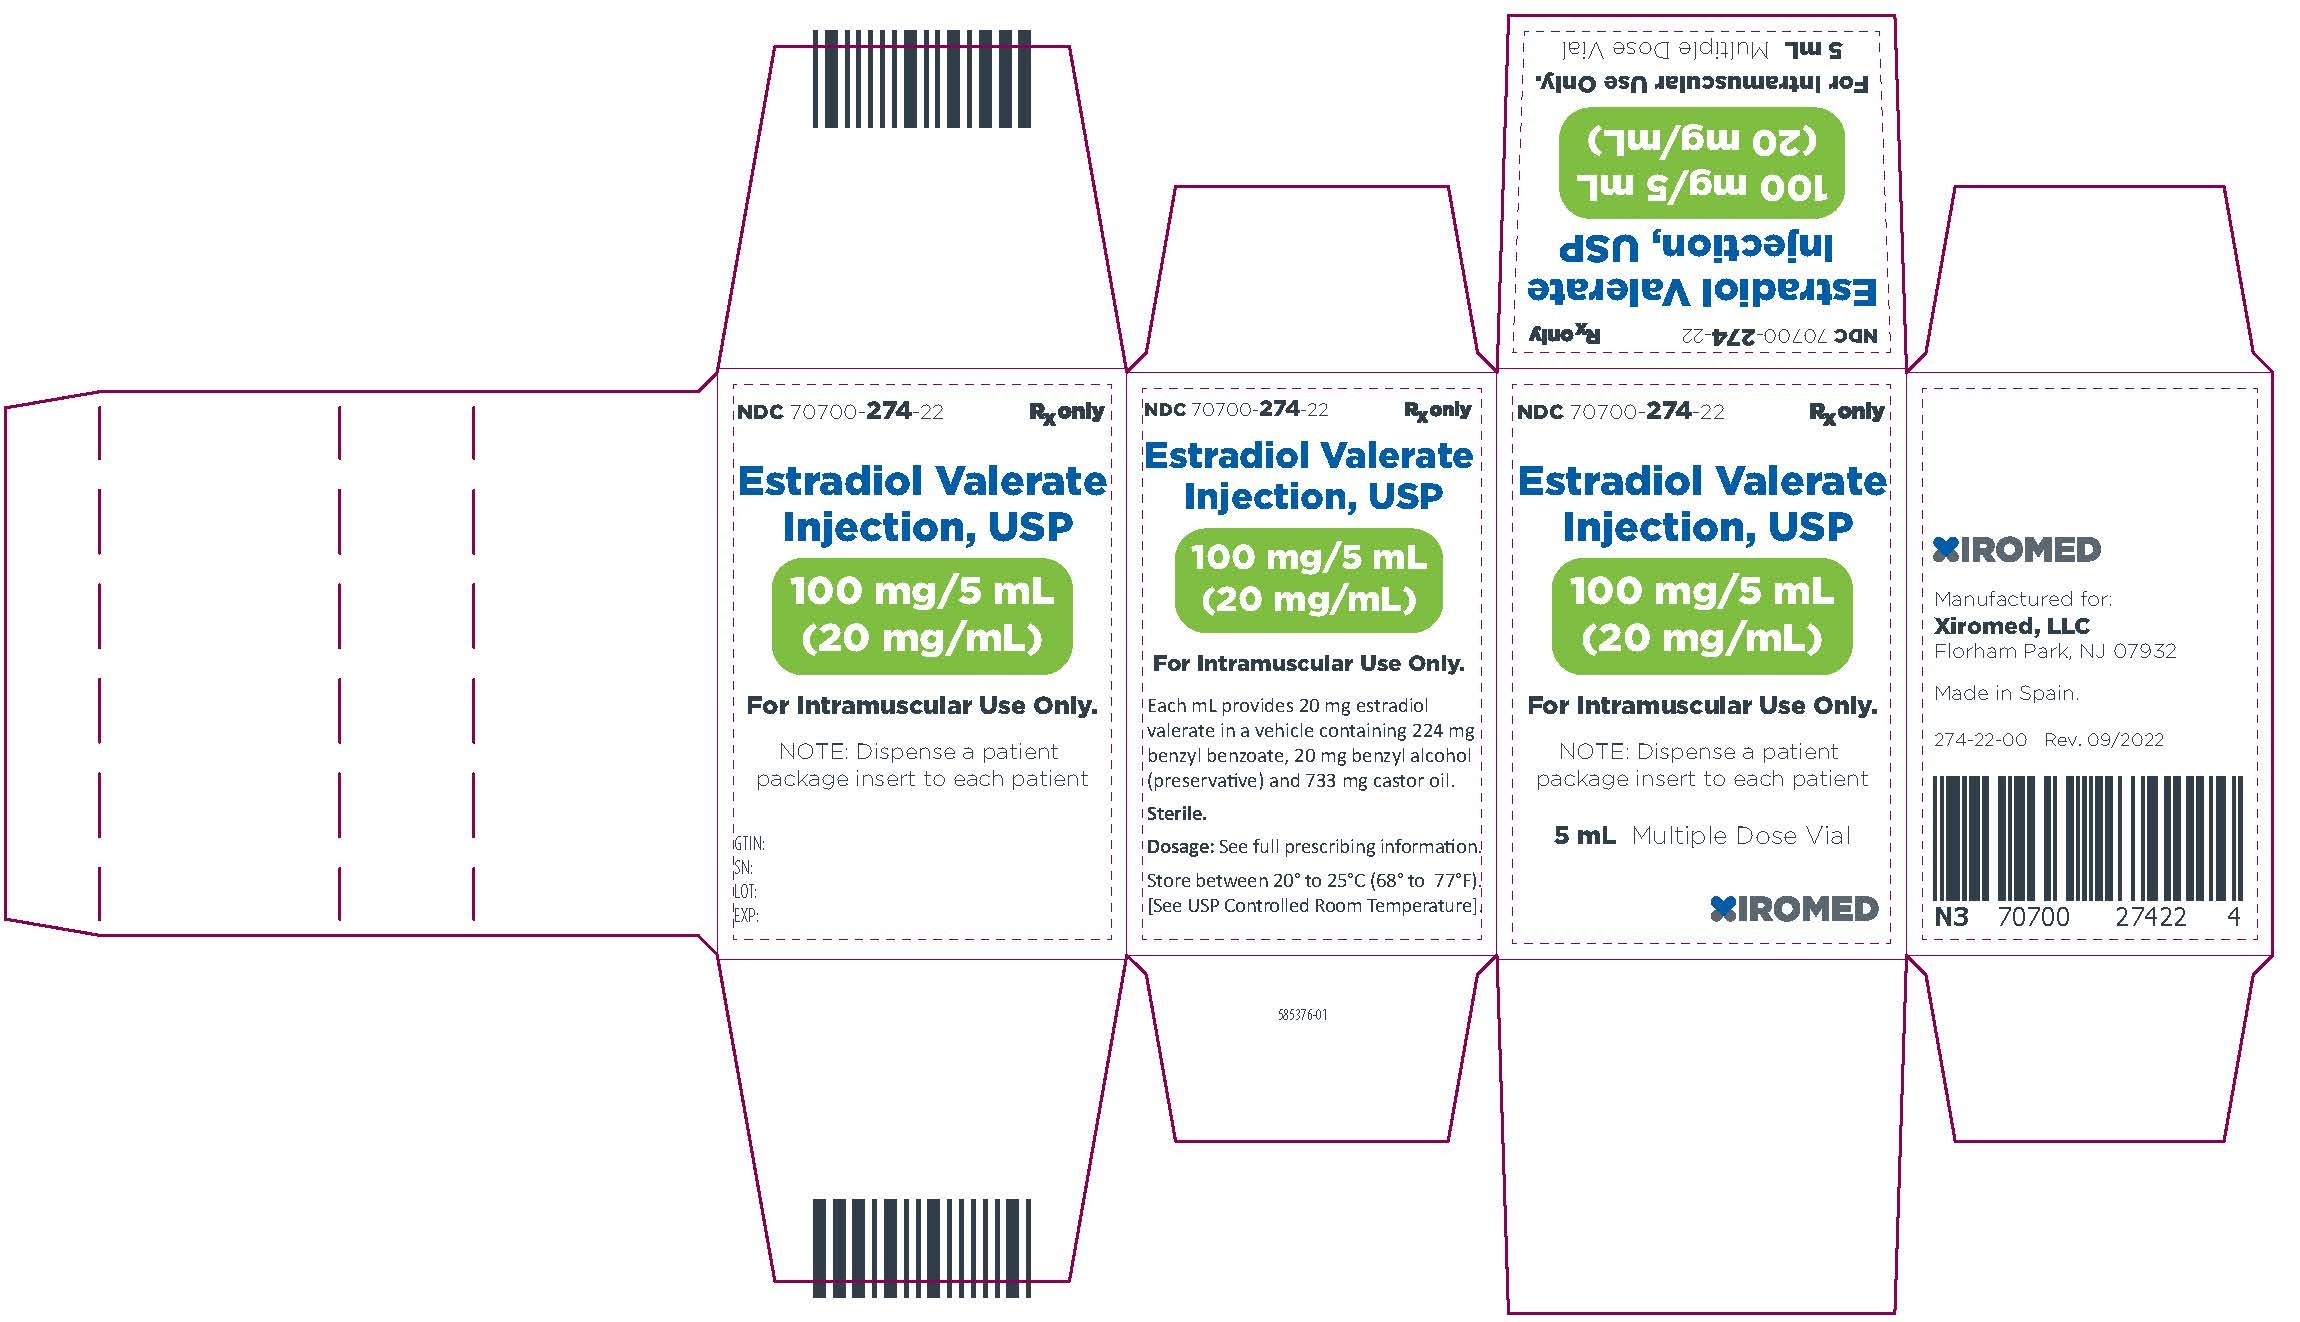 Estradiol valerate injection, USP 20 mg/mL - NDC 70700-274-22- Carton Label